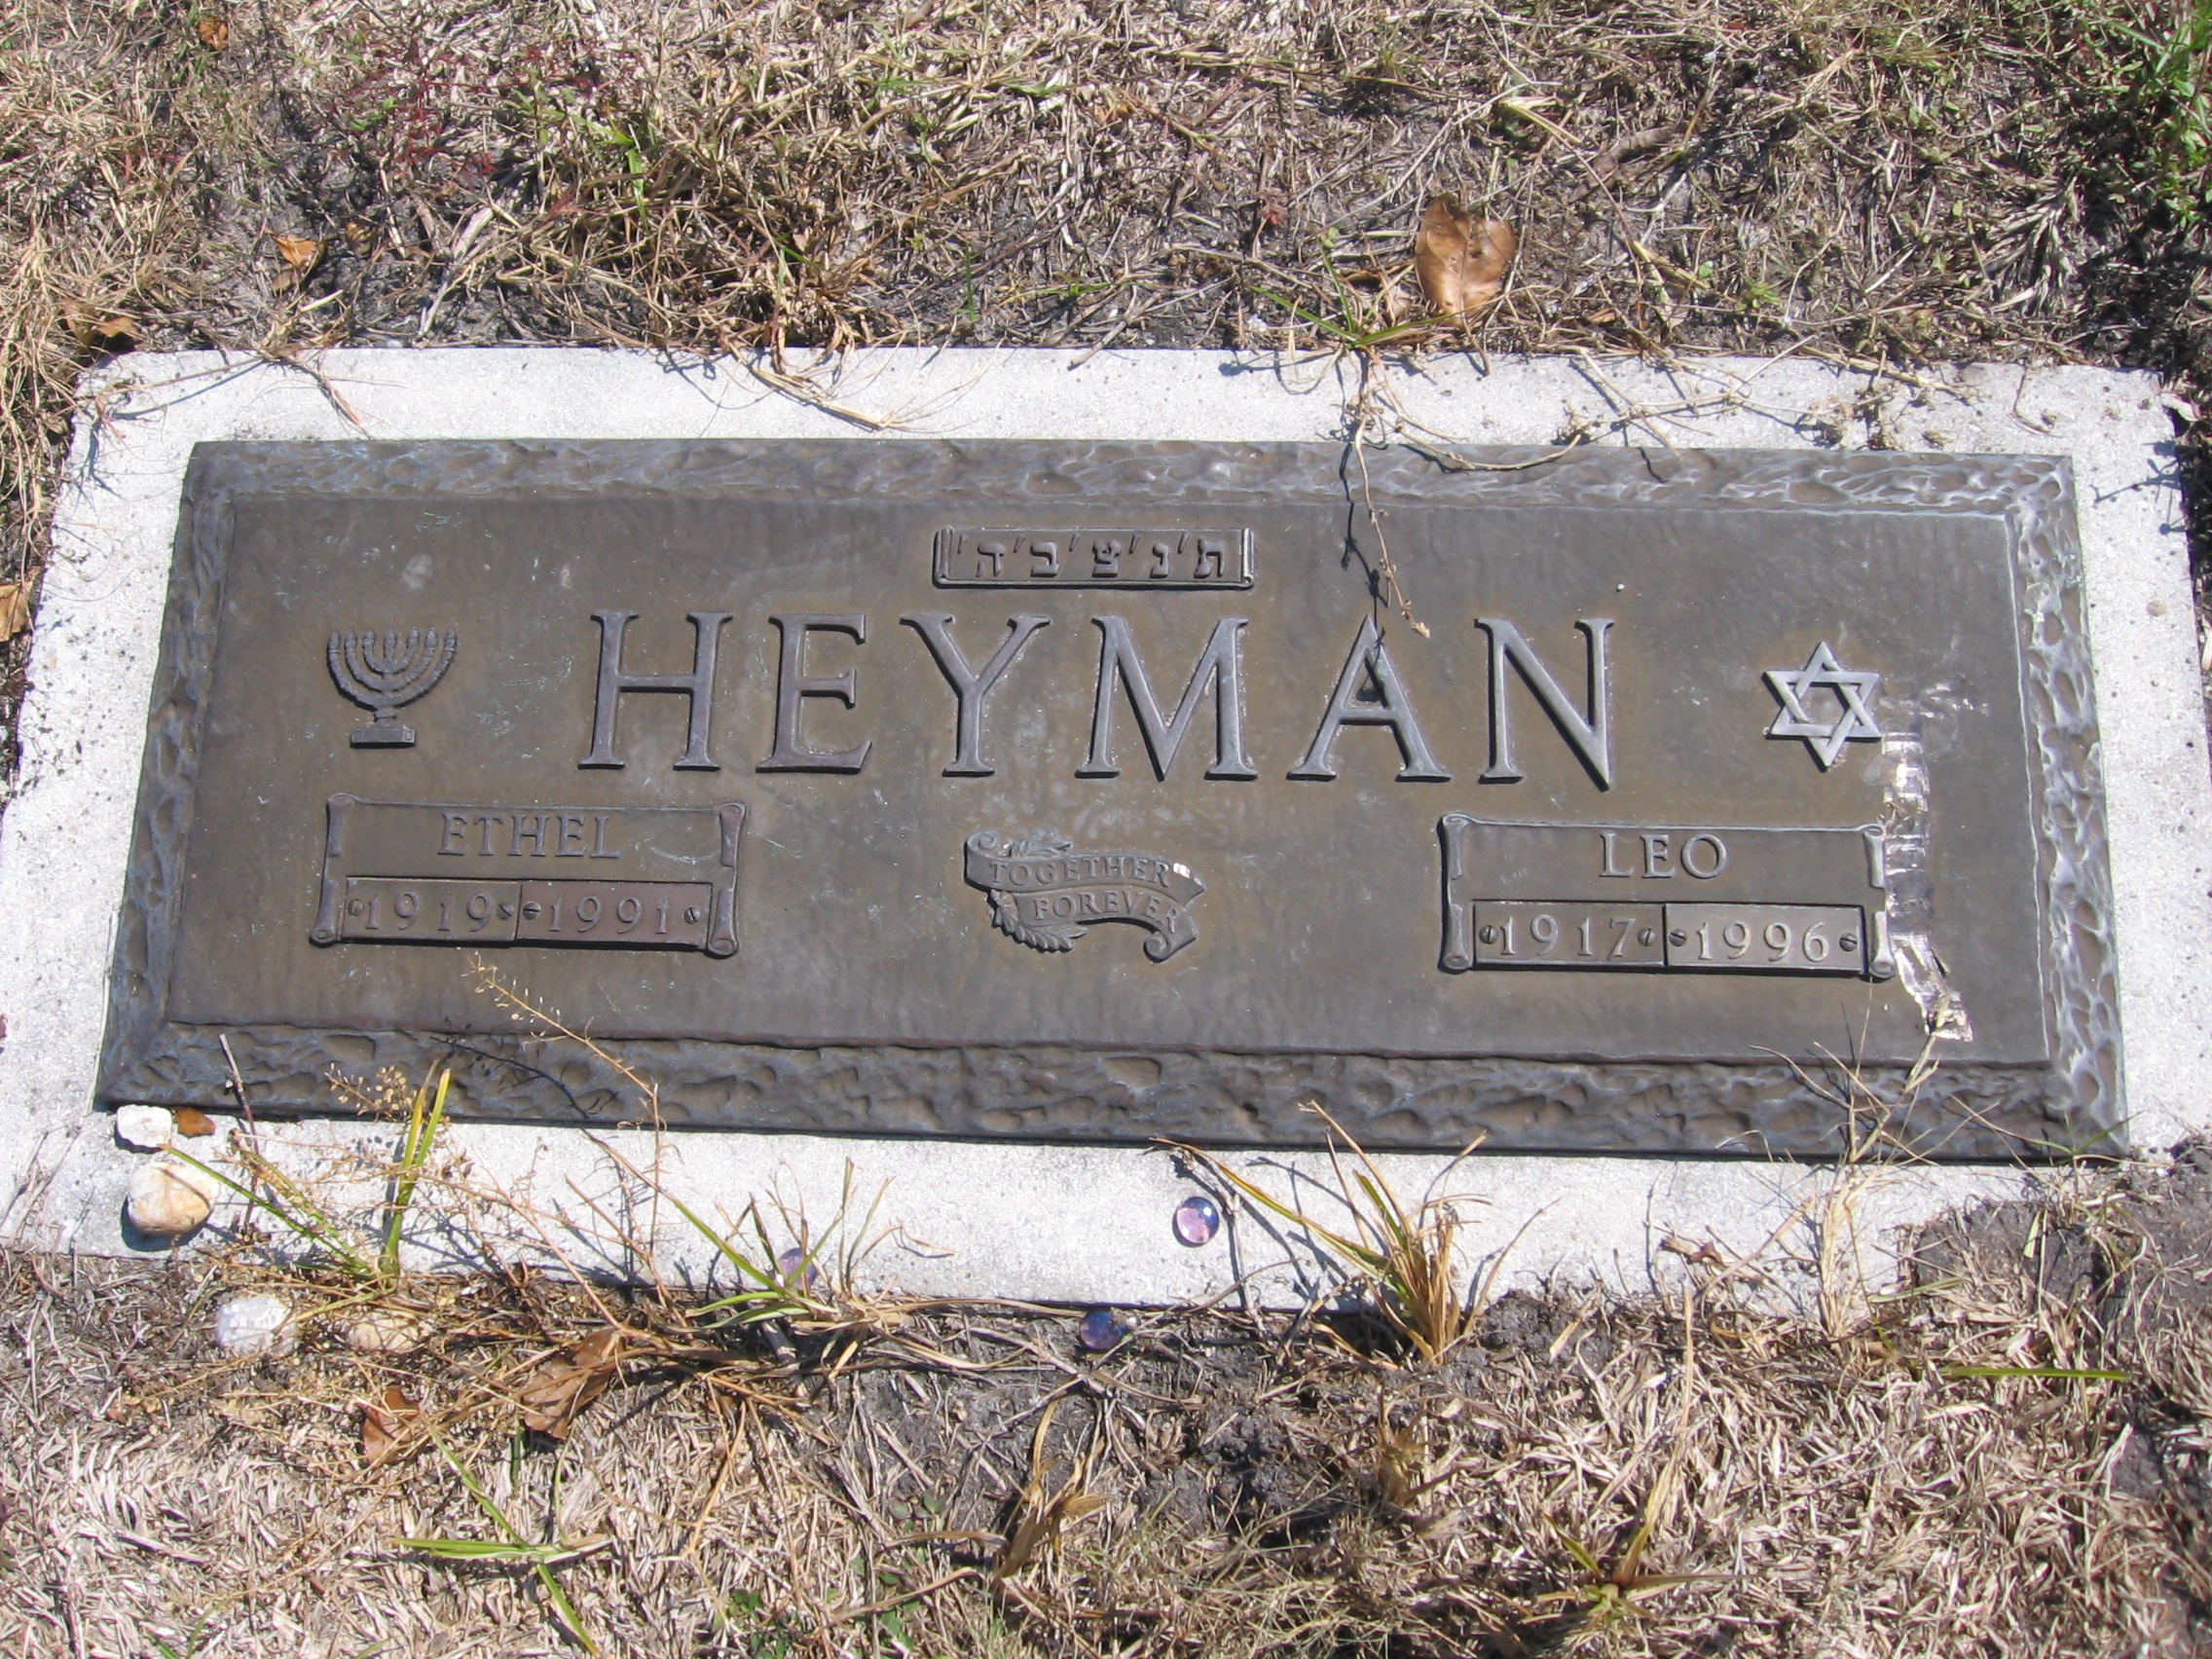 Ethel Heyman